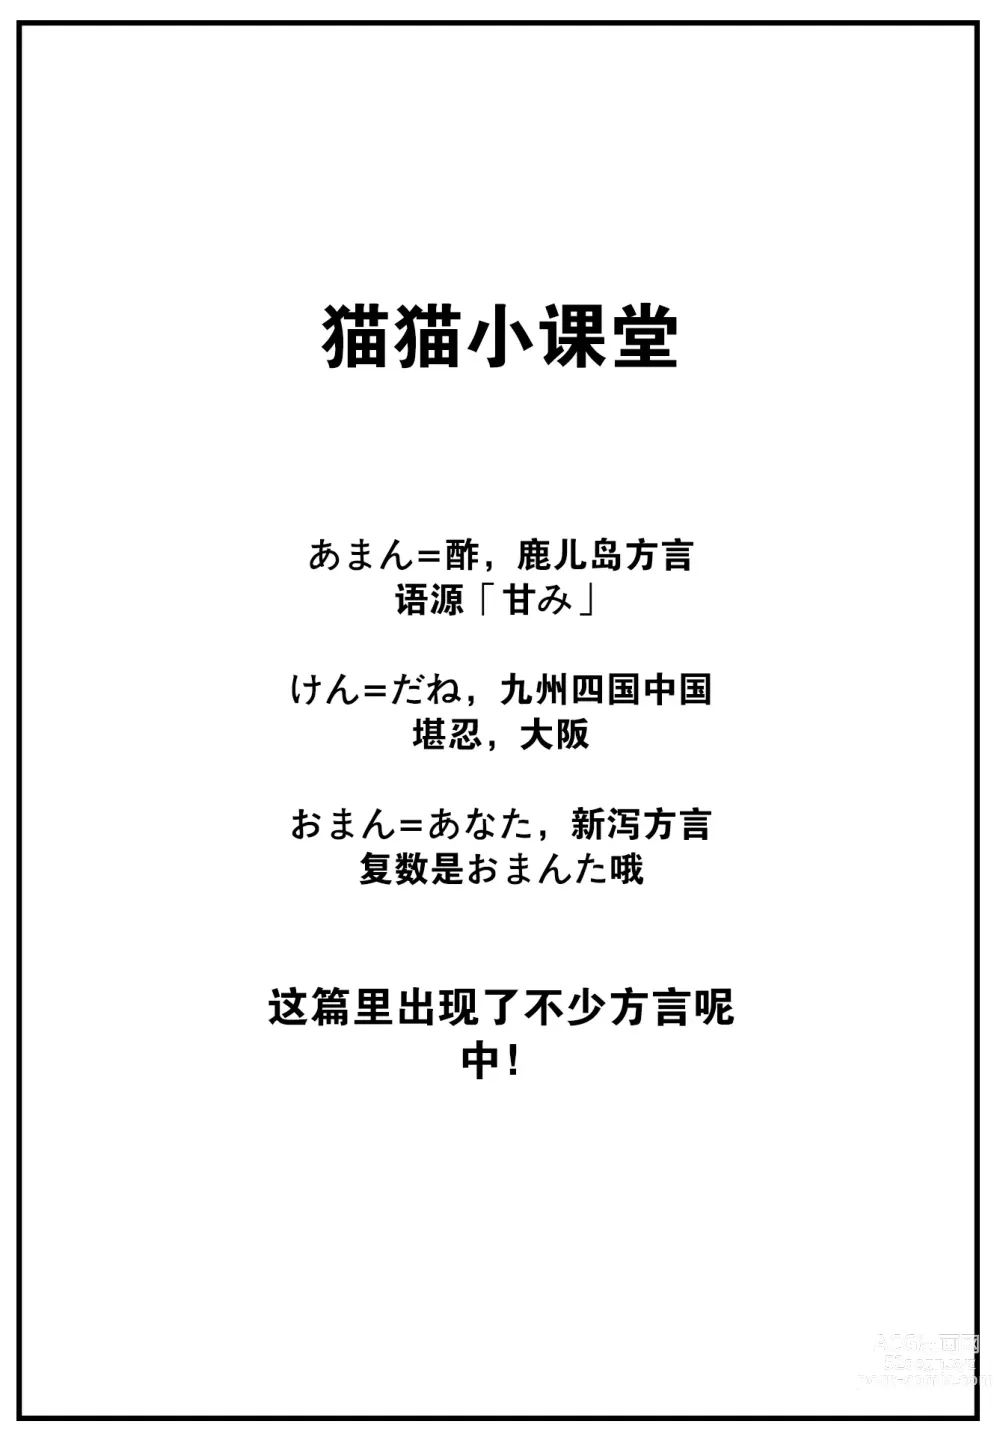 Page 22 of manga Amai shitatari